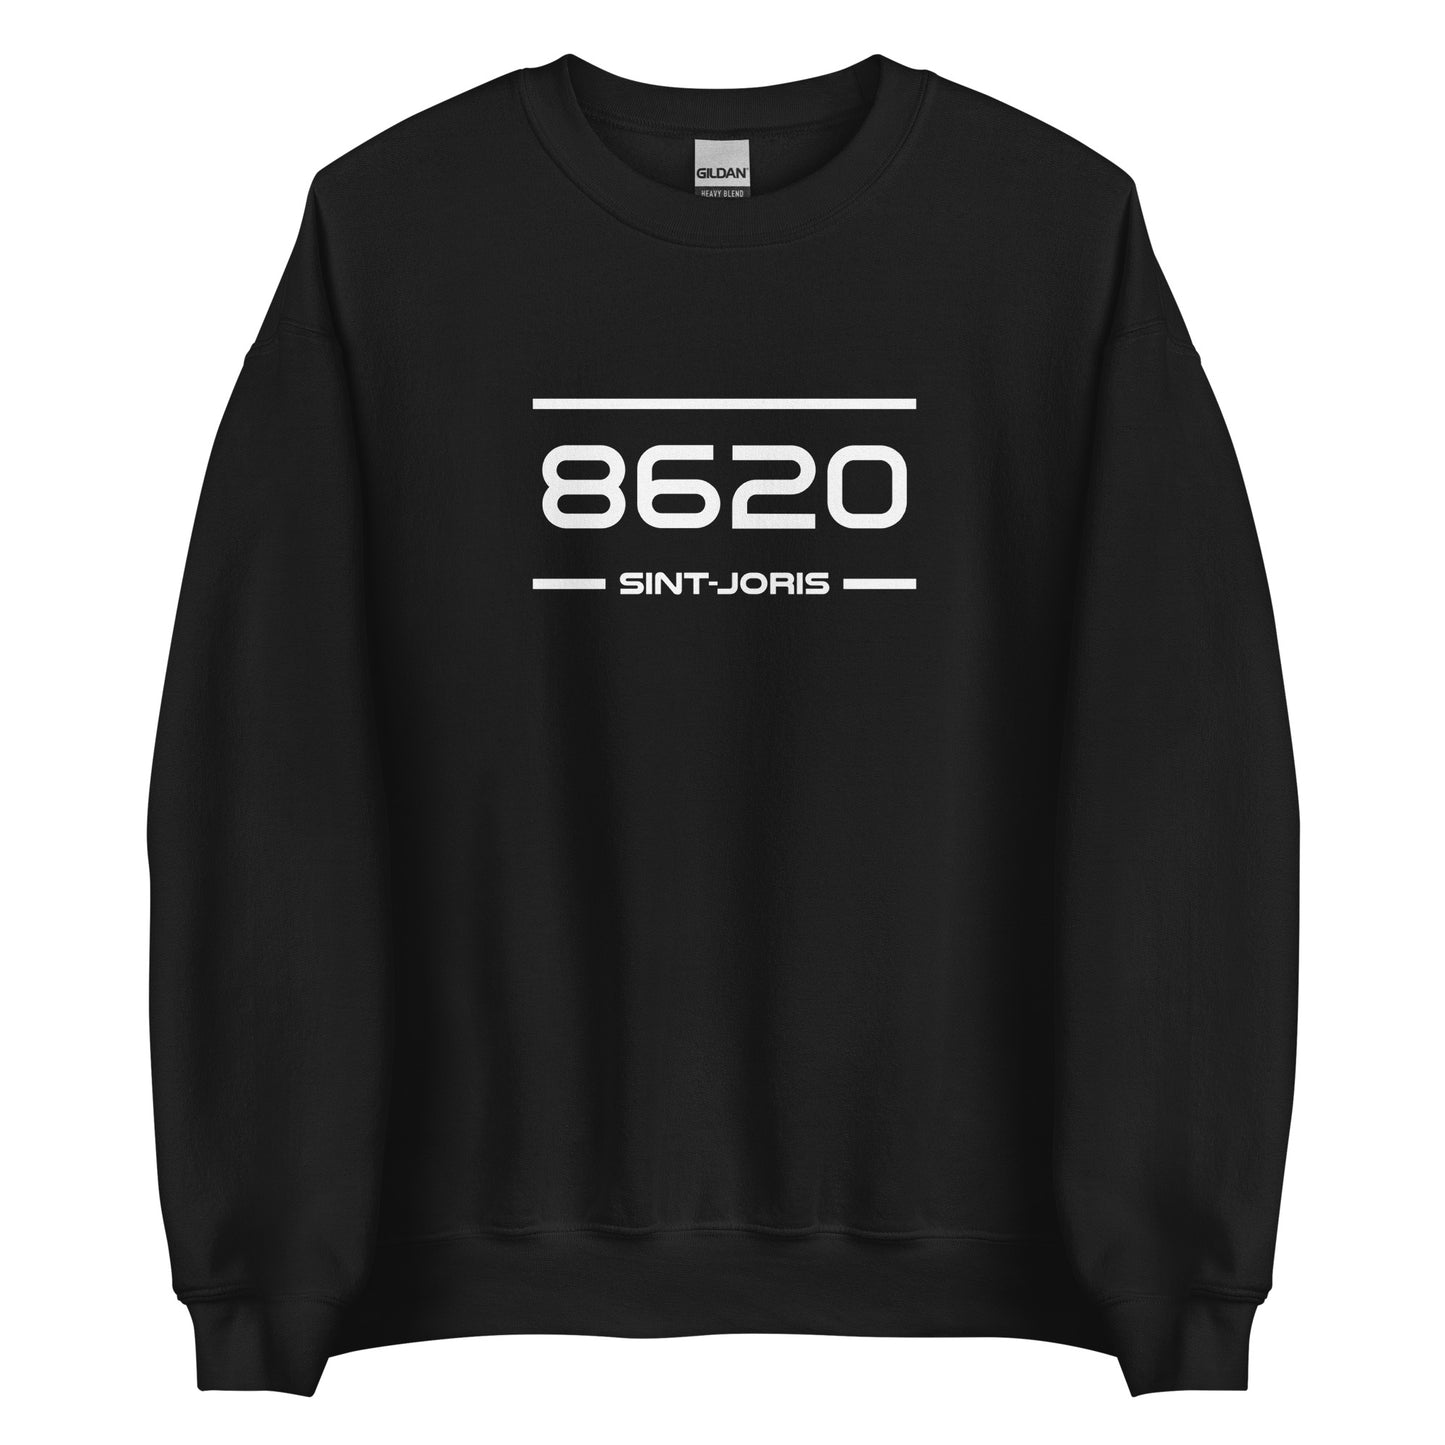 Sweater - 8620 - Sint-Joris (M/V)